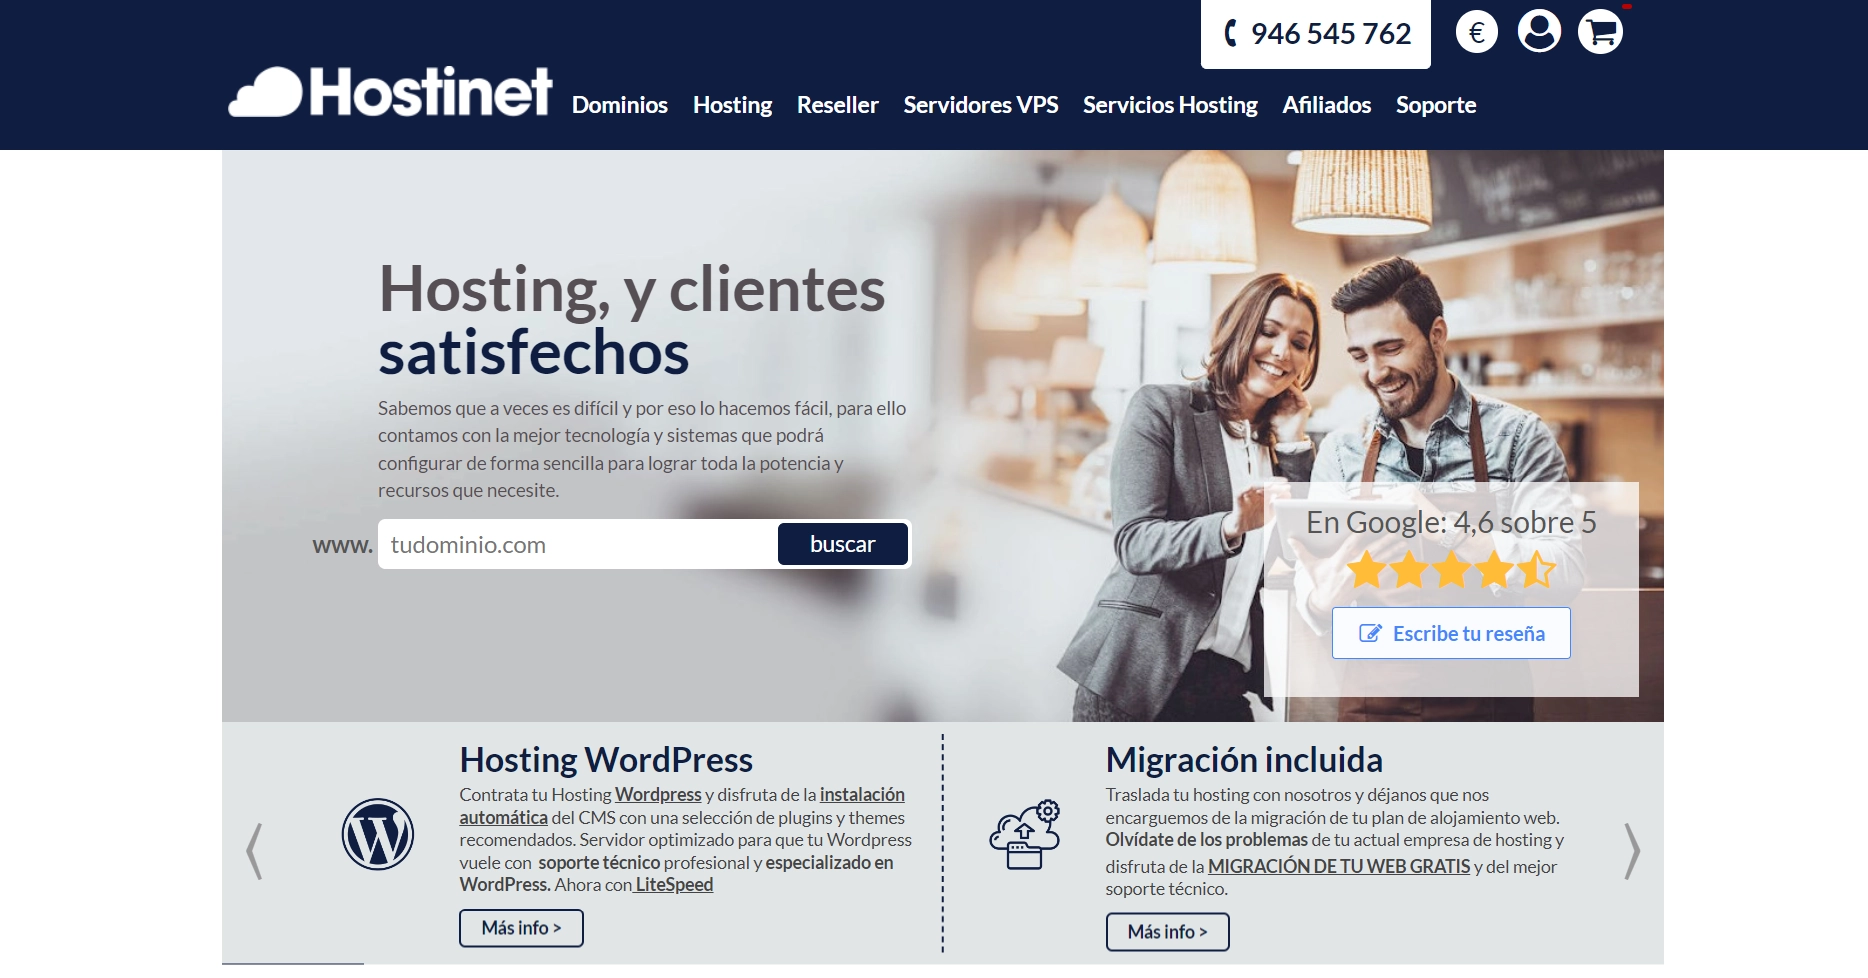 Hostinet web hosting